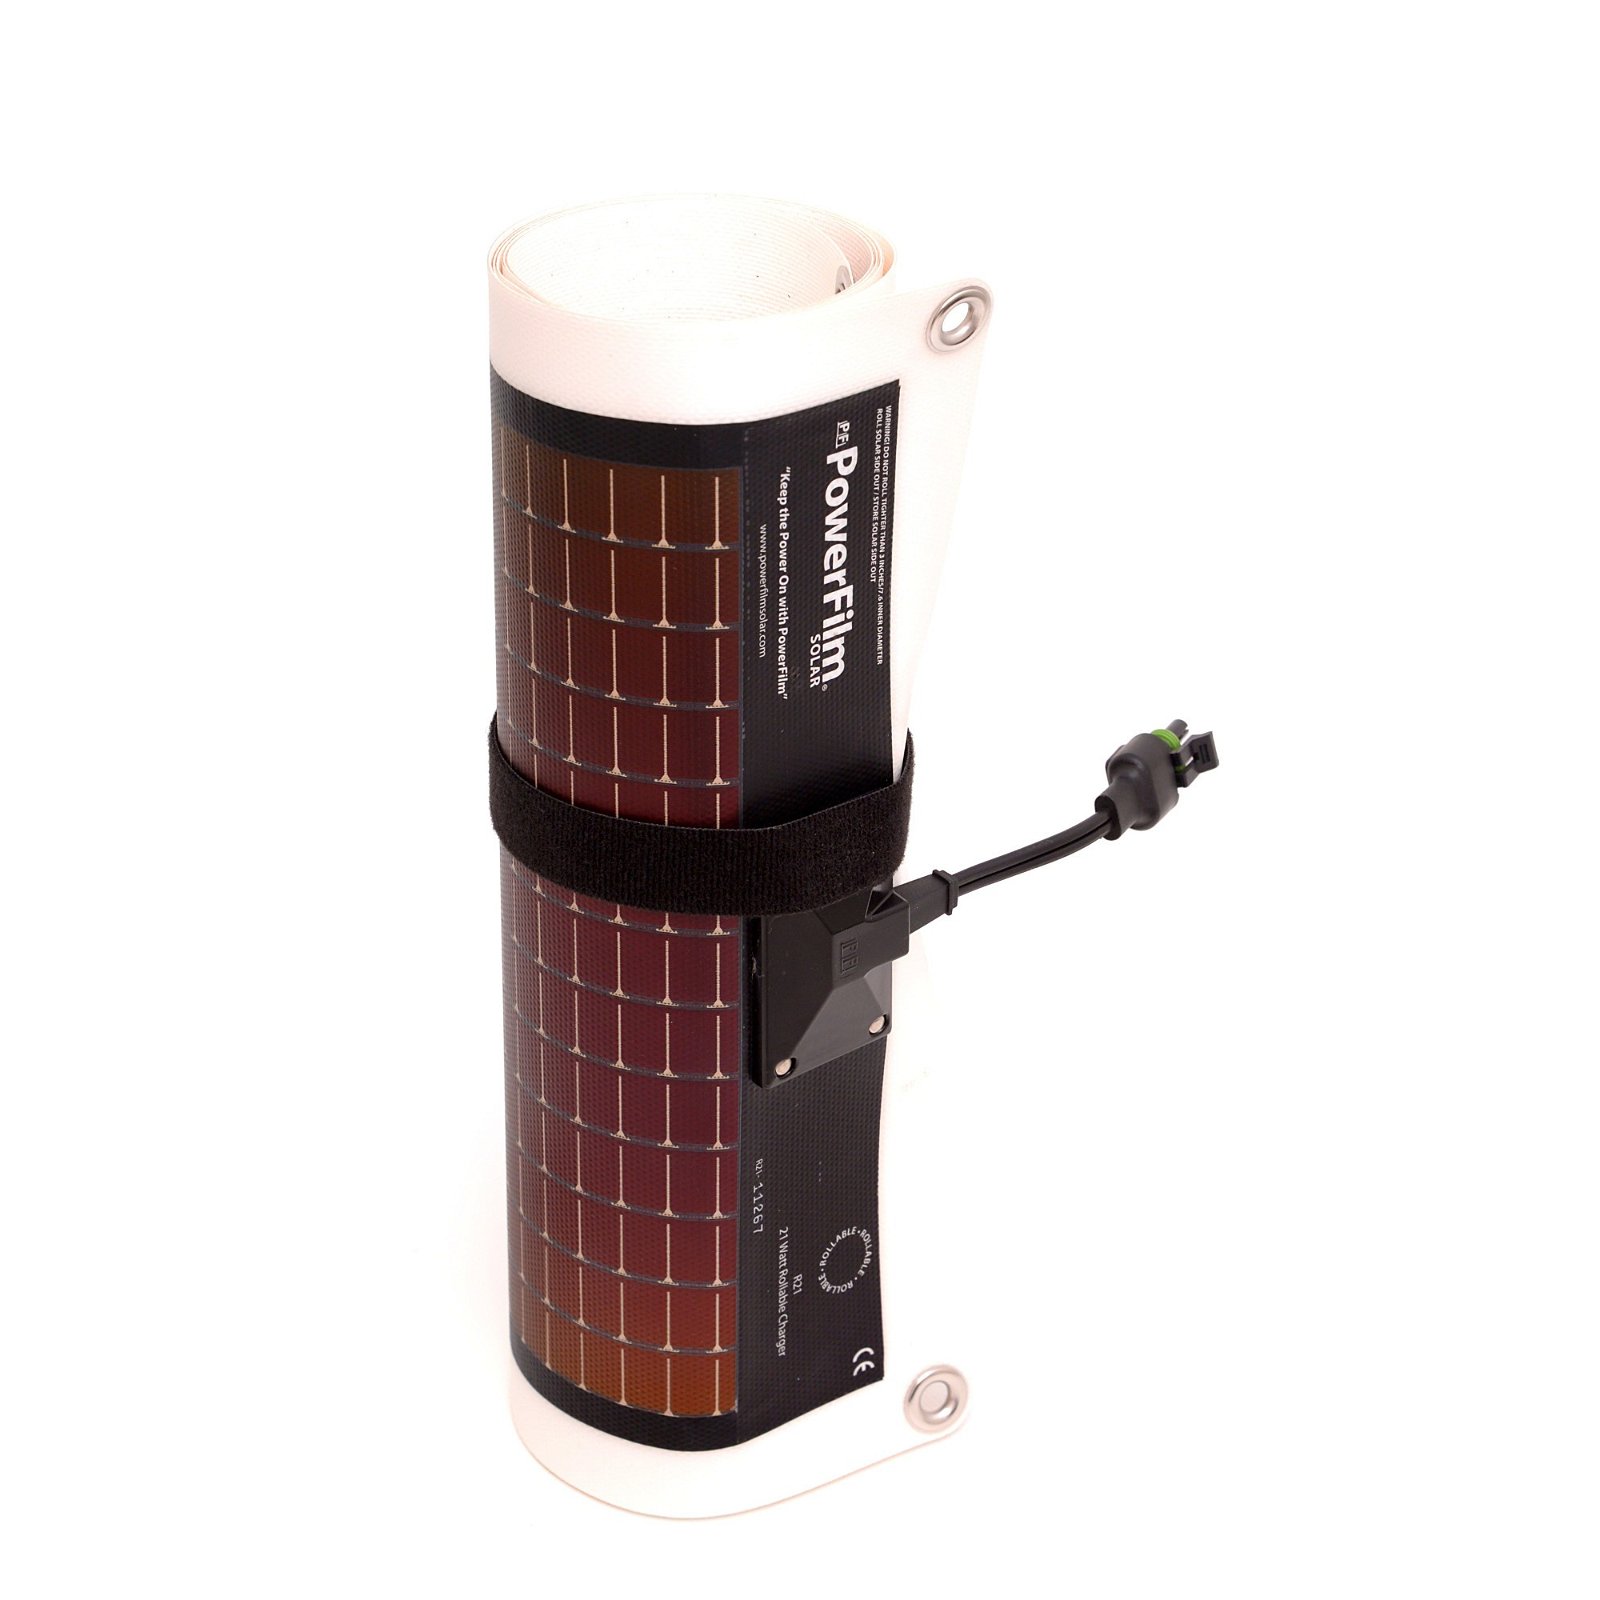 Solar panel R21 - 21W 368x1543mm - retractable